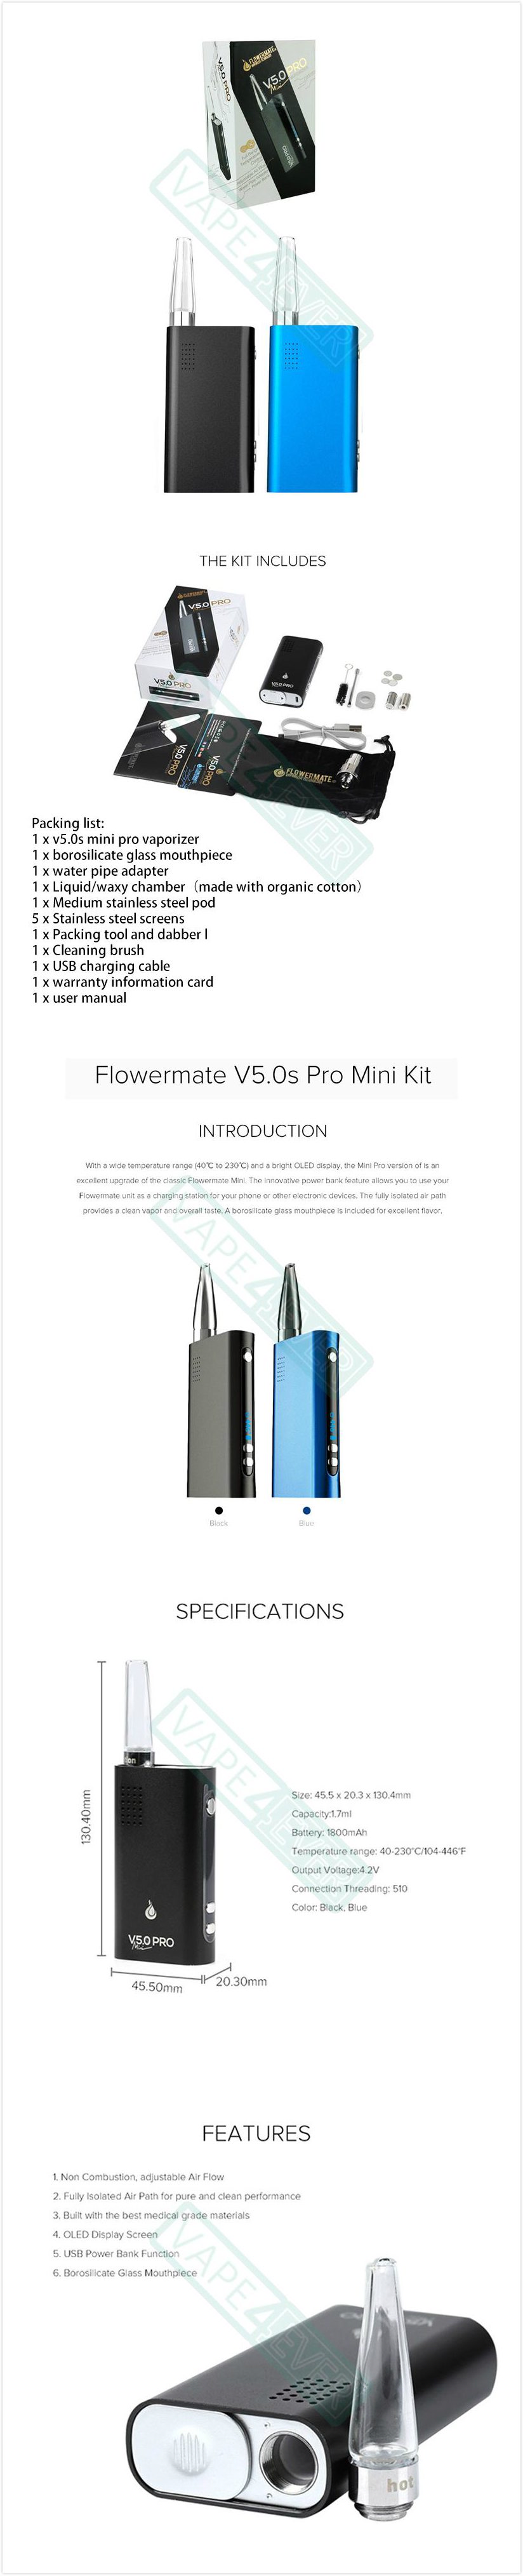 Flowermate V5.0s Pro Mini Dry Herb Vaporizer Kit With Dabber Tool Instruction